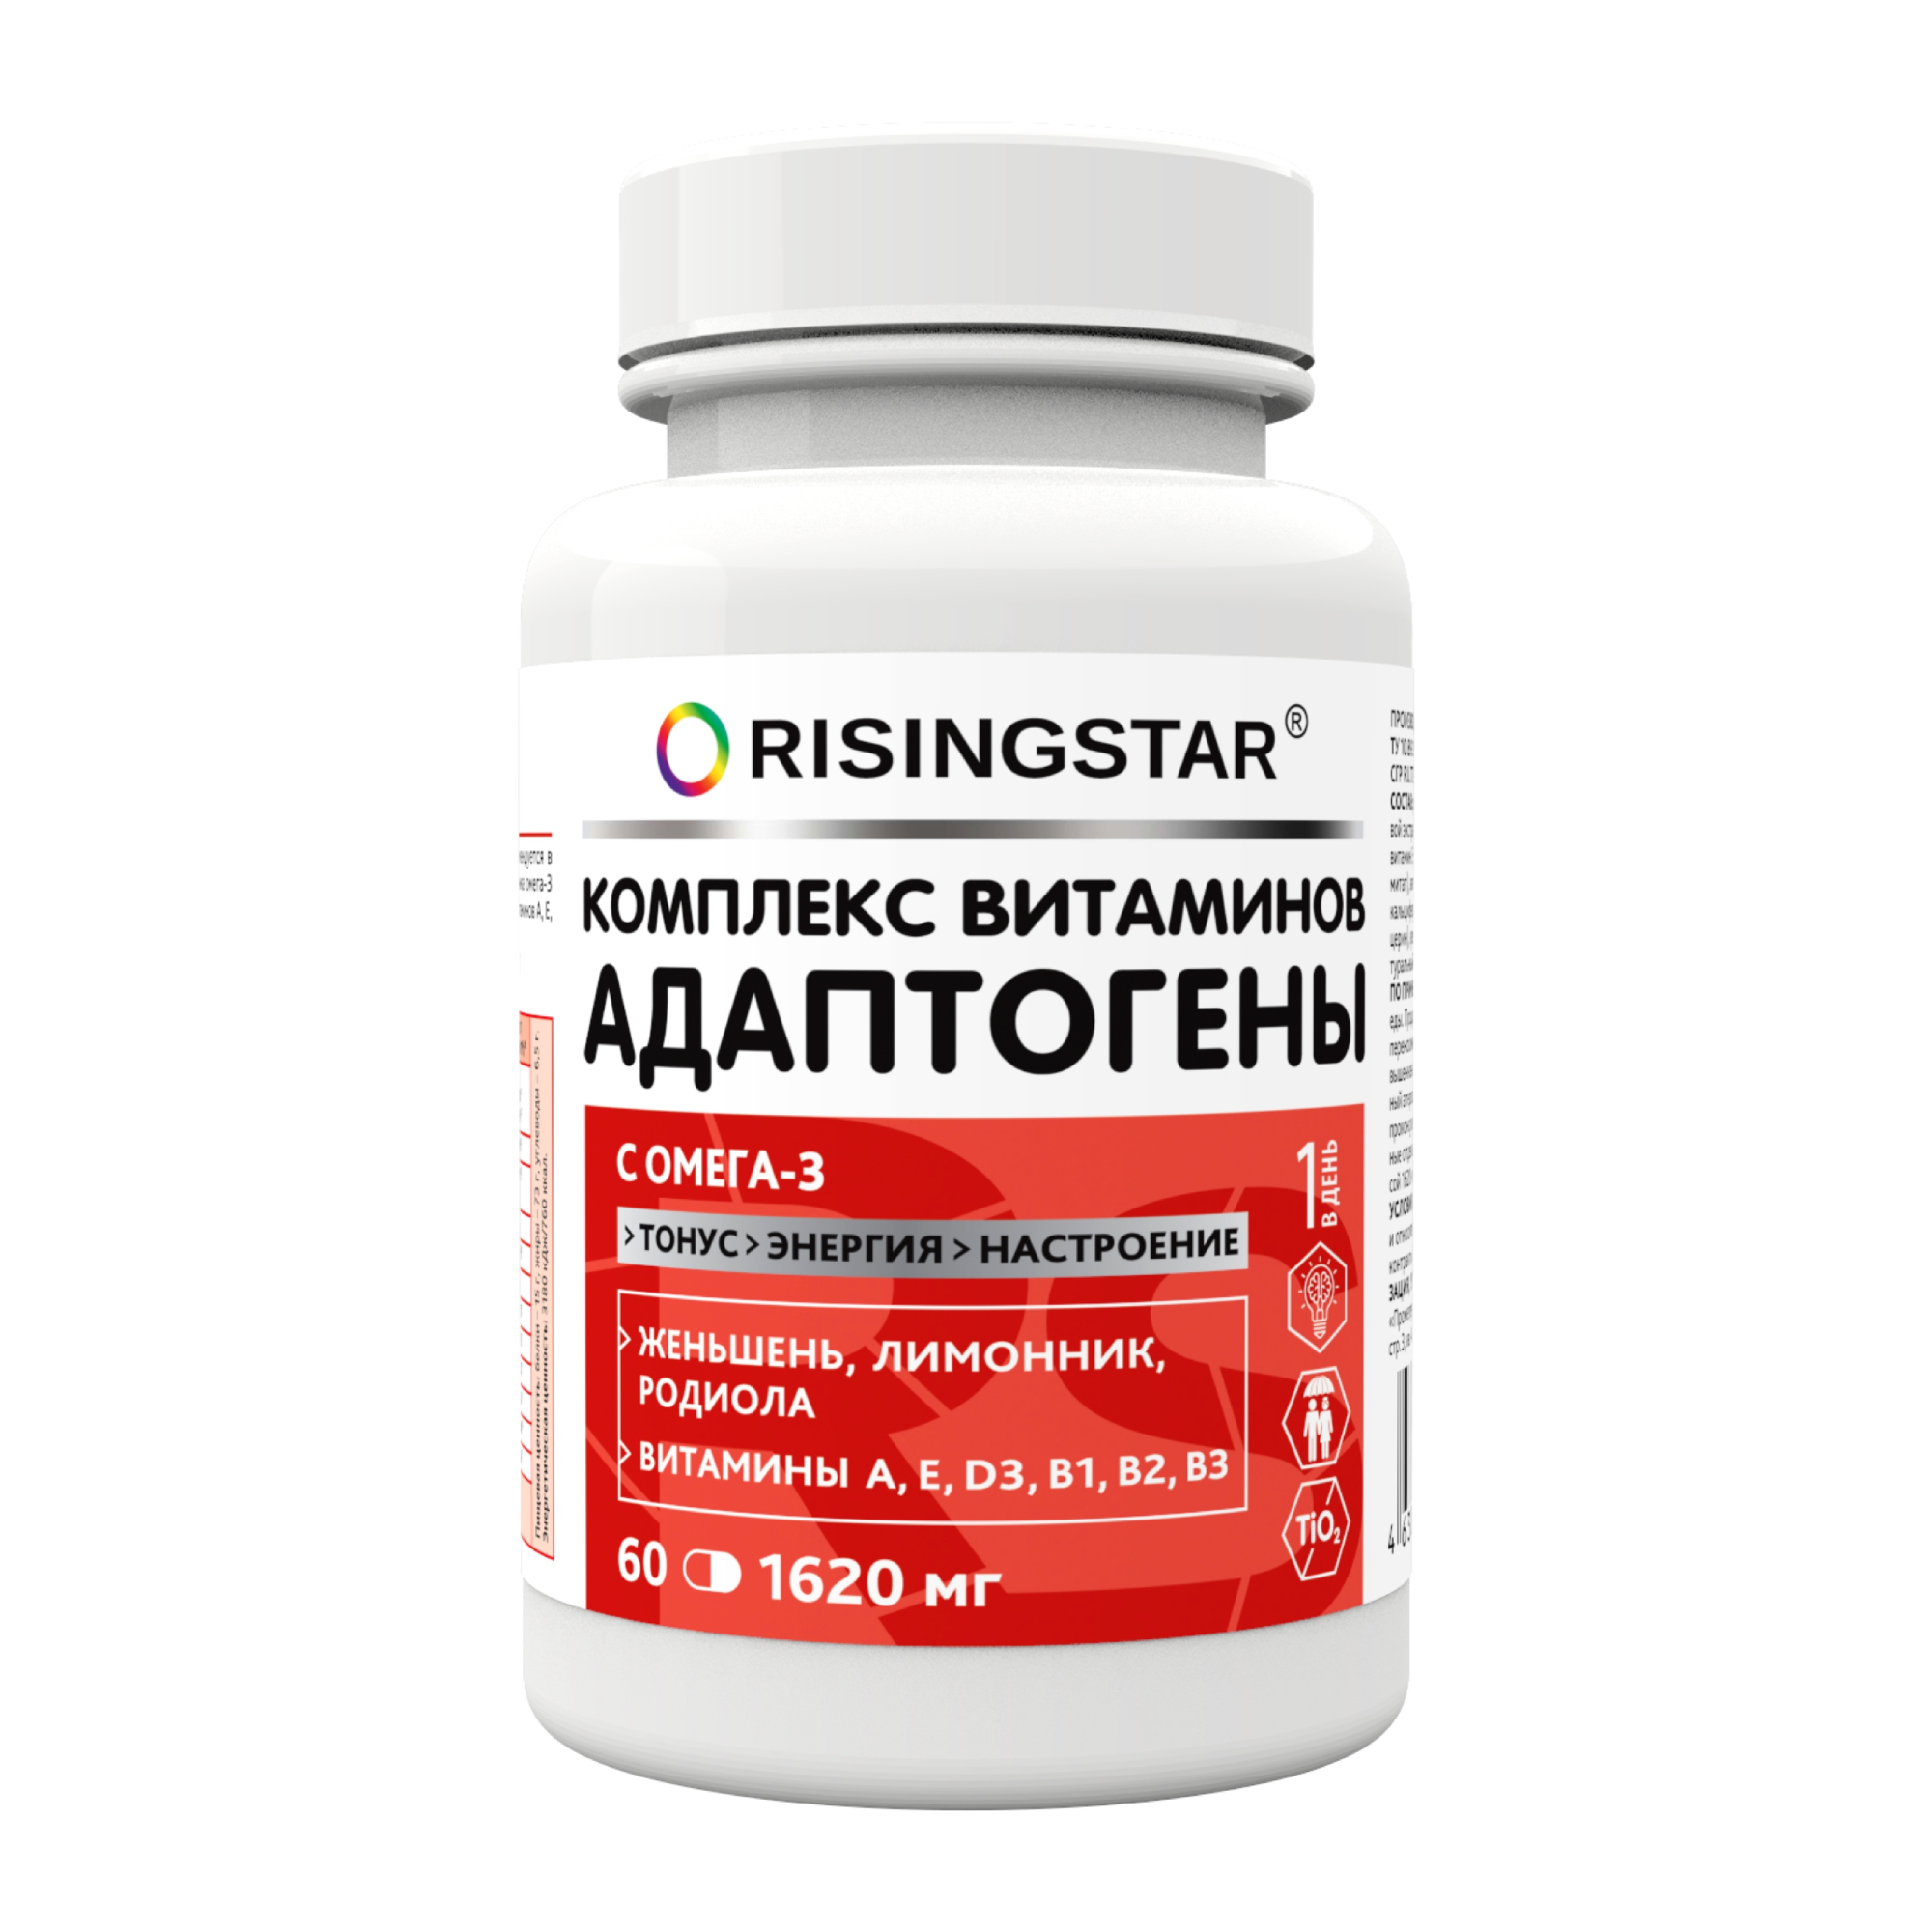 БАД Risingstar комплекс витаминов адаптогены с омега-3 60 таблеток, 100 г комплекс витаминов и адаптогенов risingstar с омега 3 1620 мг 60 шт